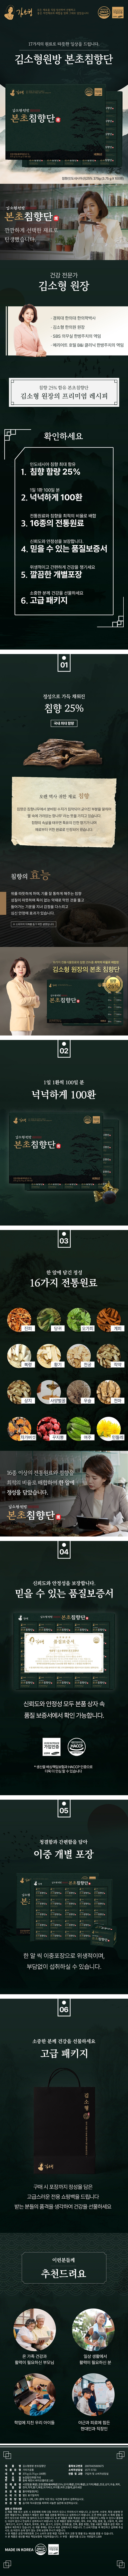 kimsohyung_bonchochim_3.75x100_info.jpg